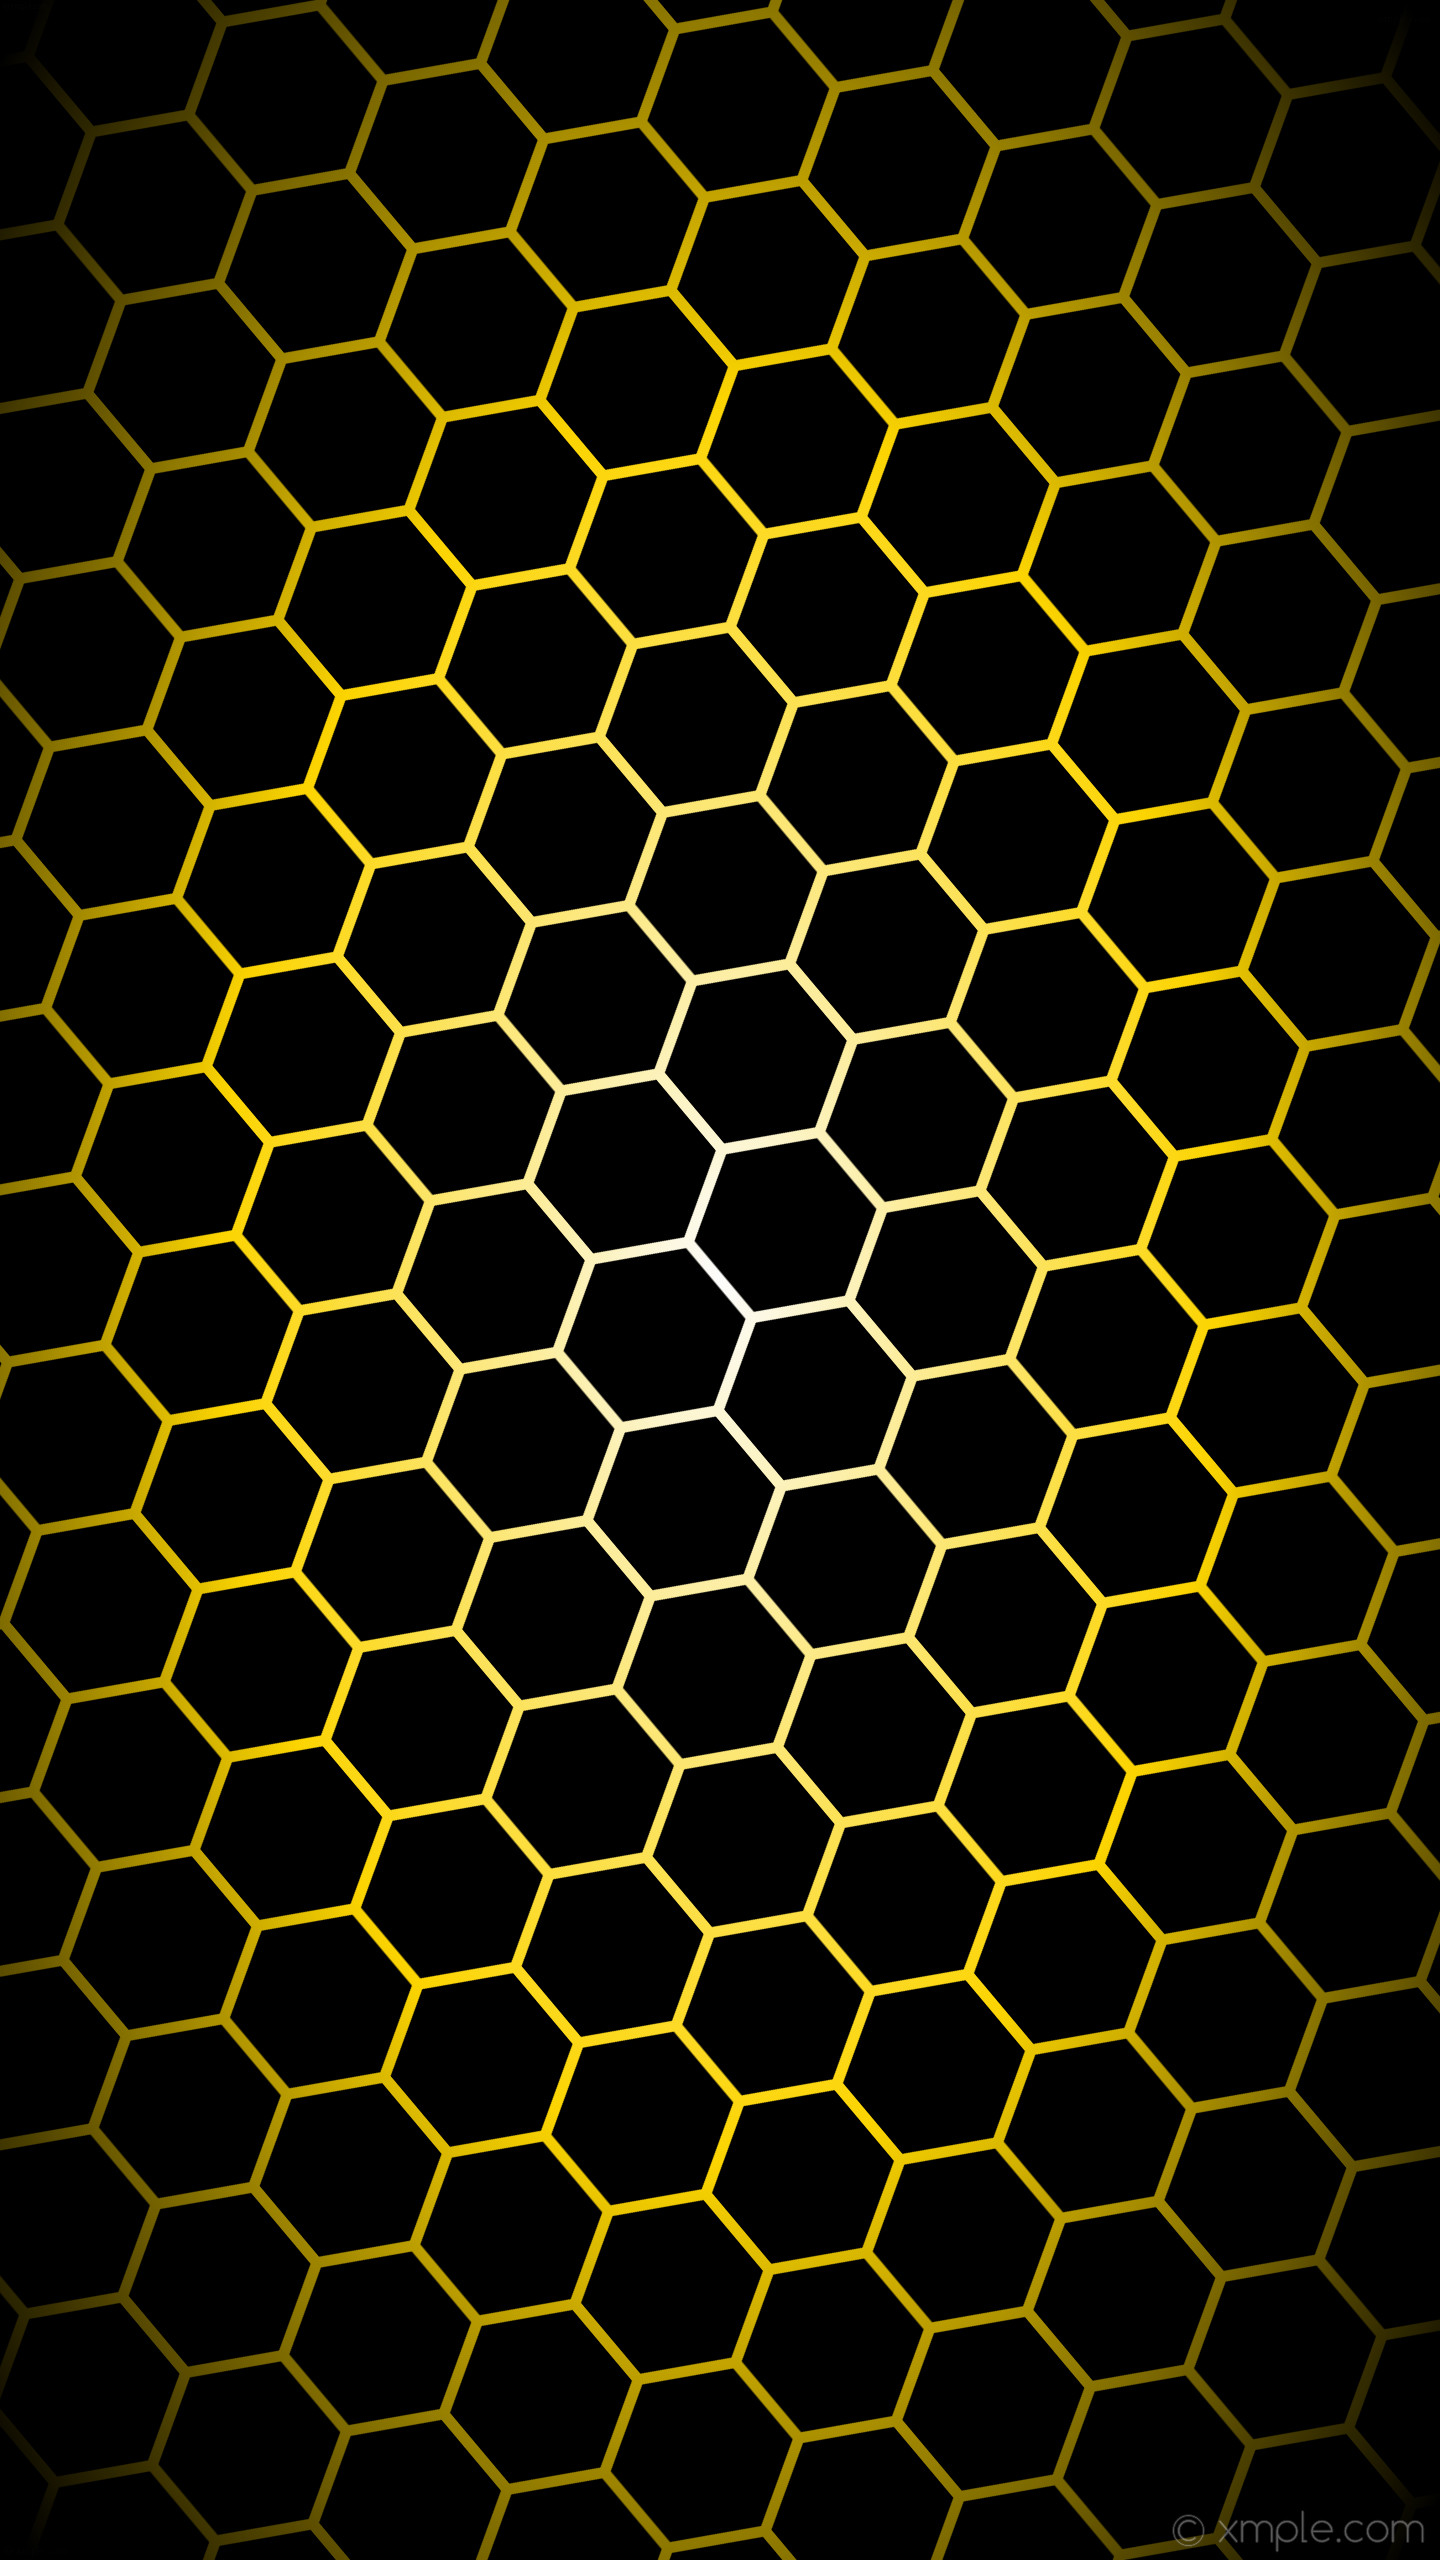 1440x2560 wallpaper yellow hexagon glow white gradient black gold #000000 #ffffff  #ffd700 diagonal 40